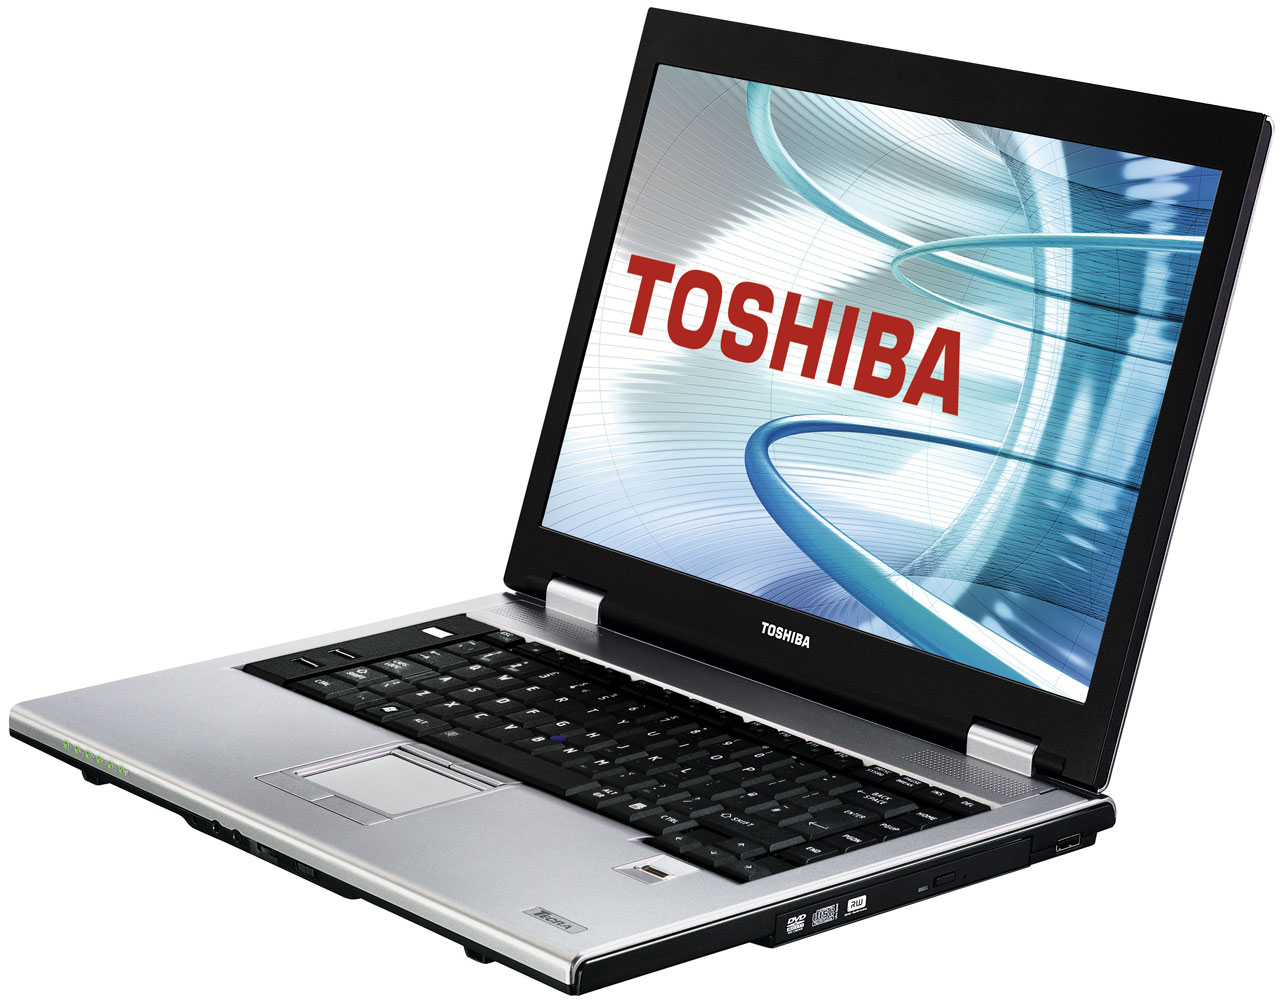 Toshiba Tecra Drivers